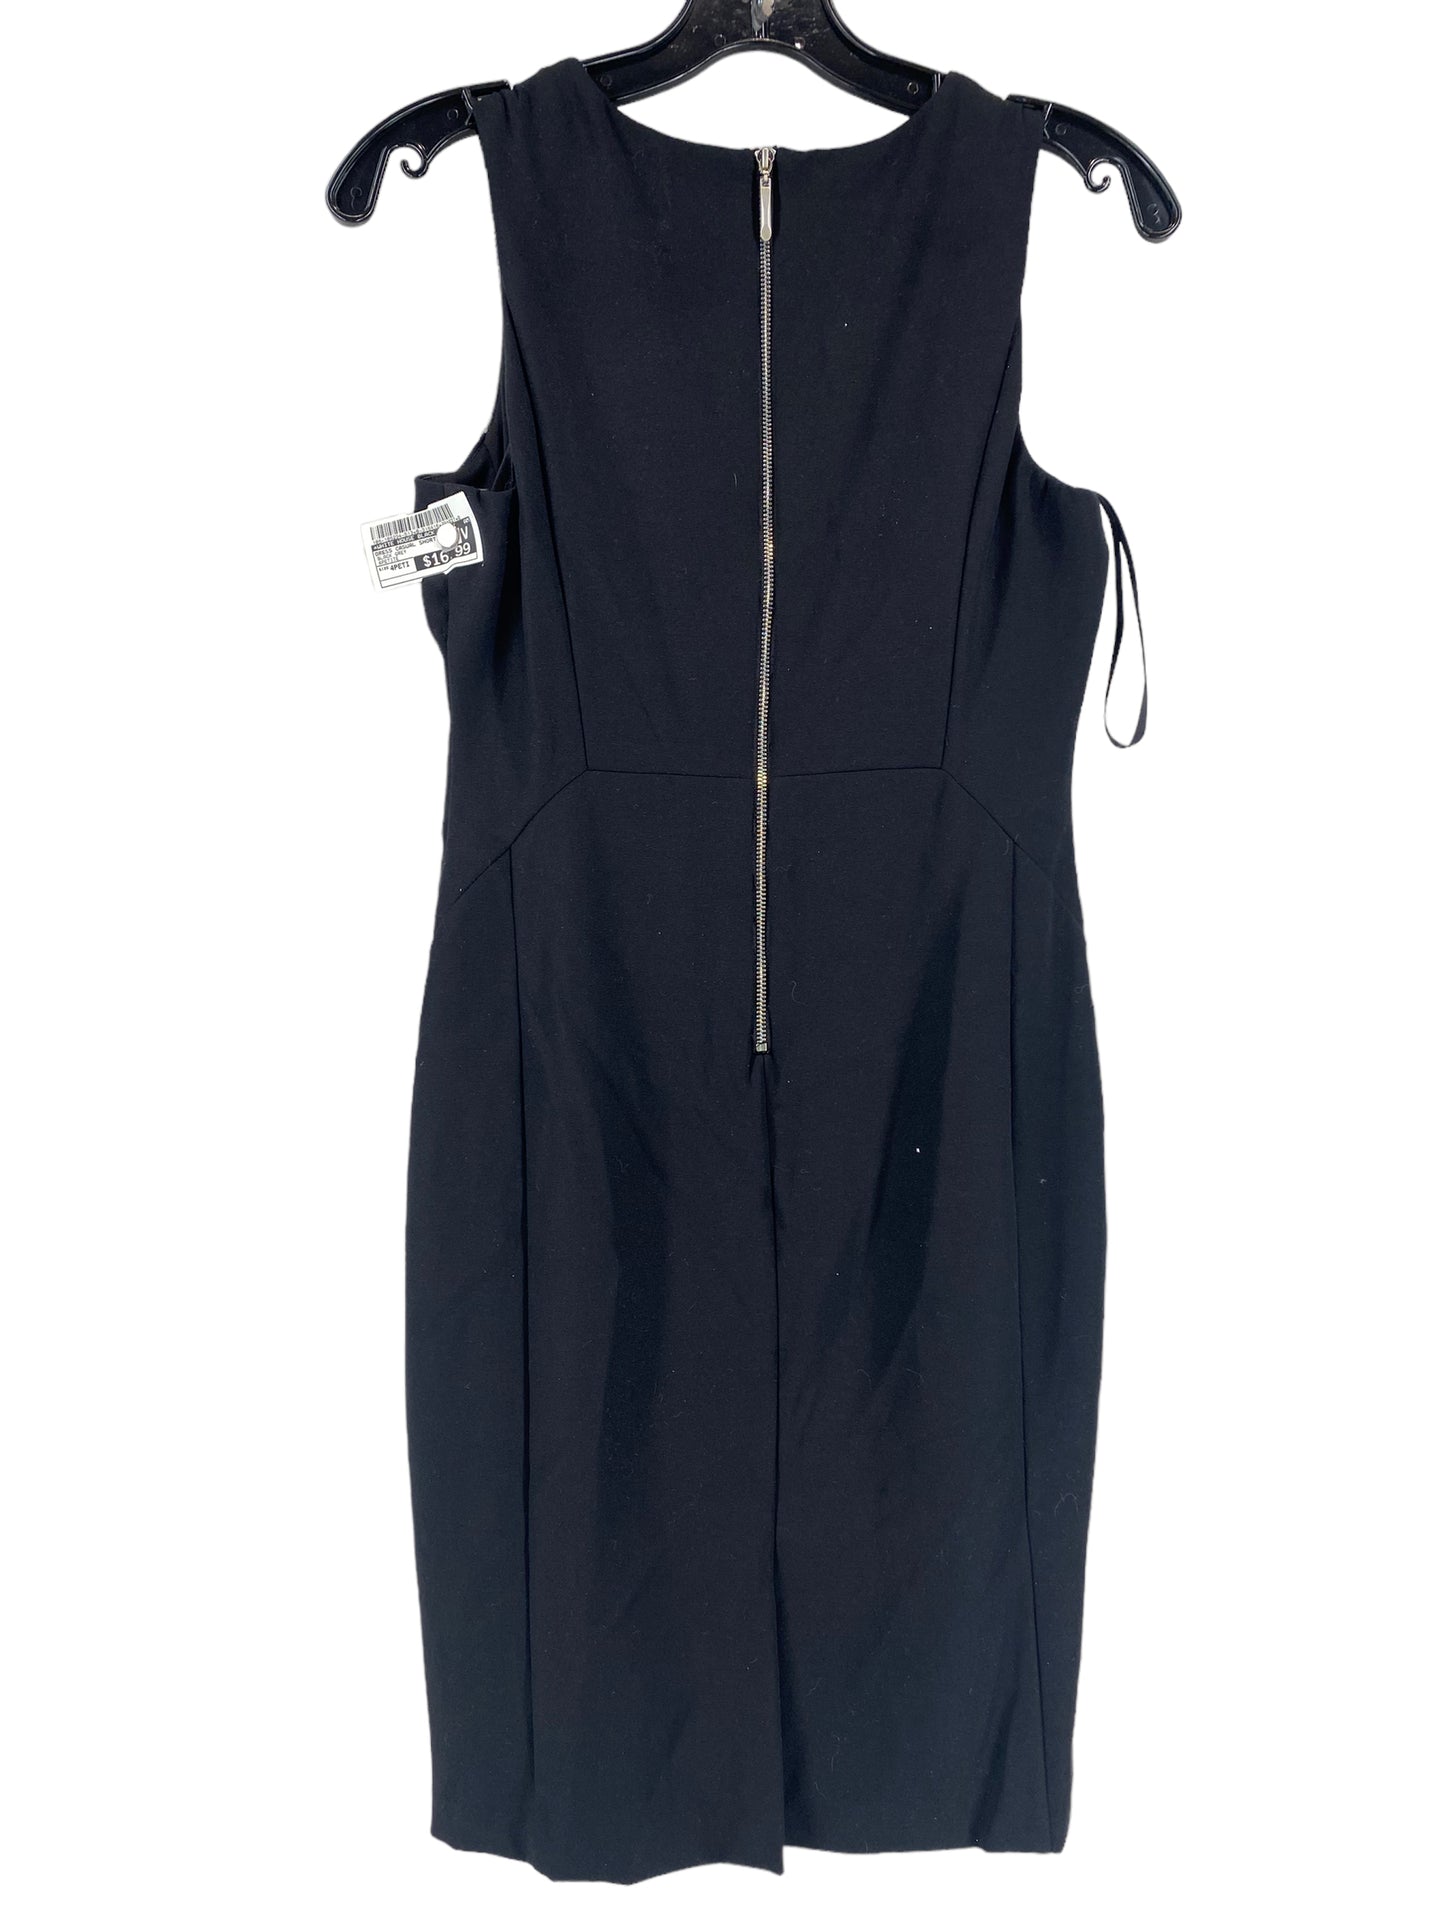 Dress Casual Short By White House Black Market  Size: 4petite